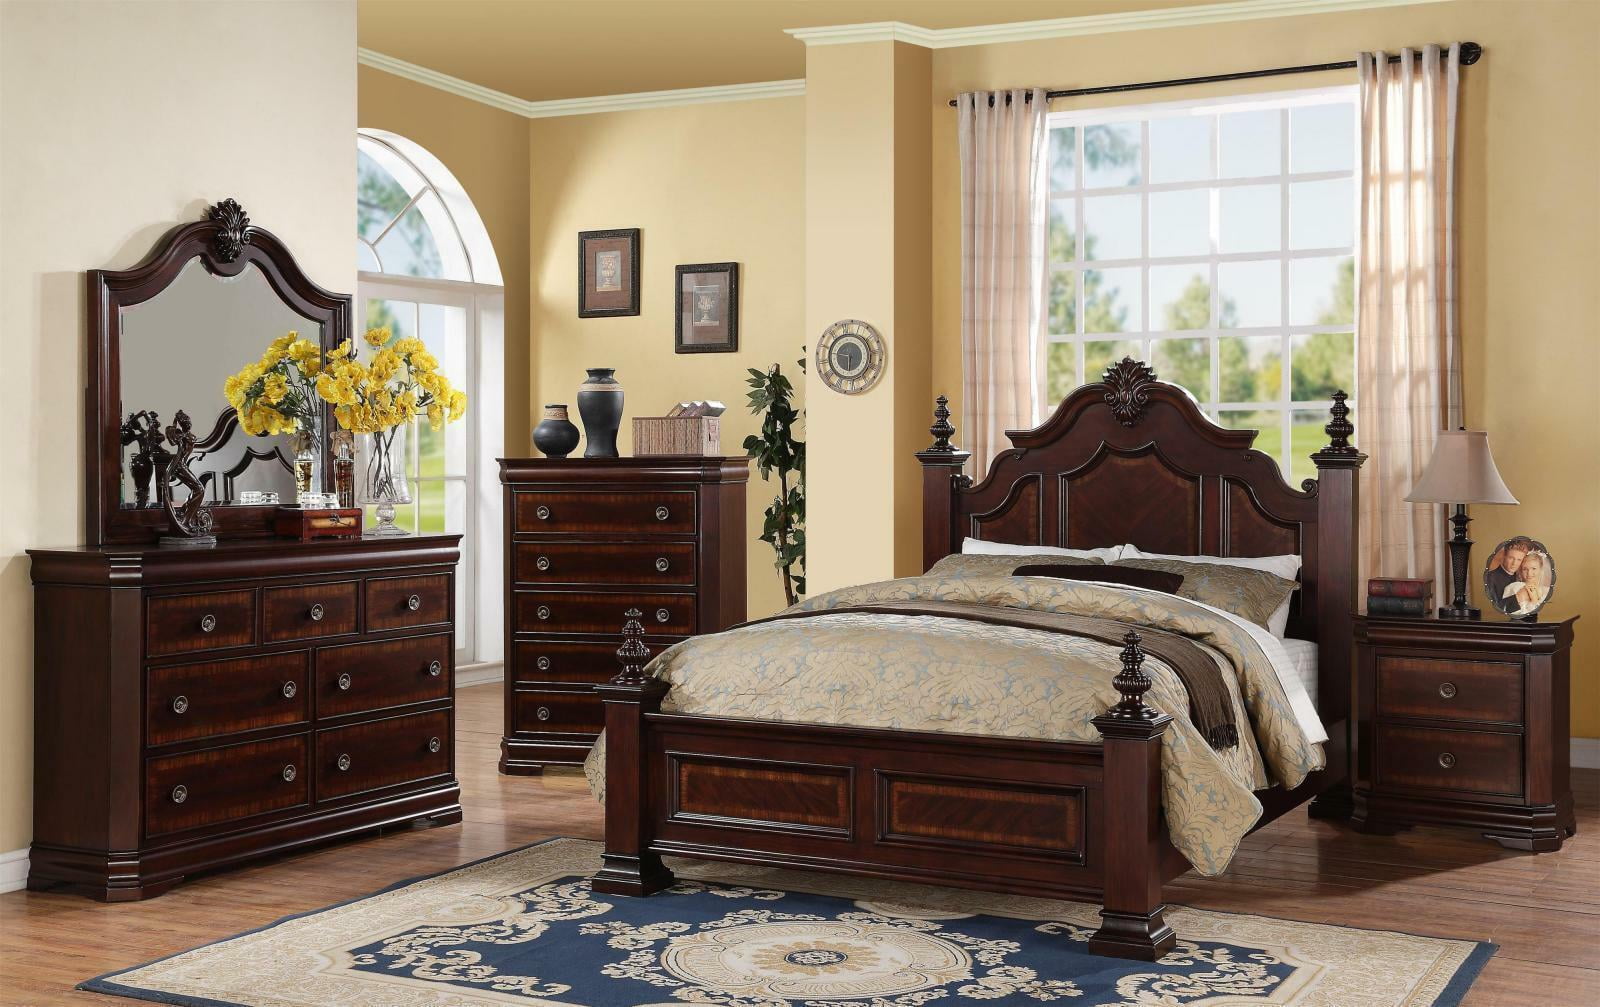 max fine bedroom furniture set